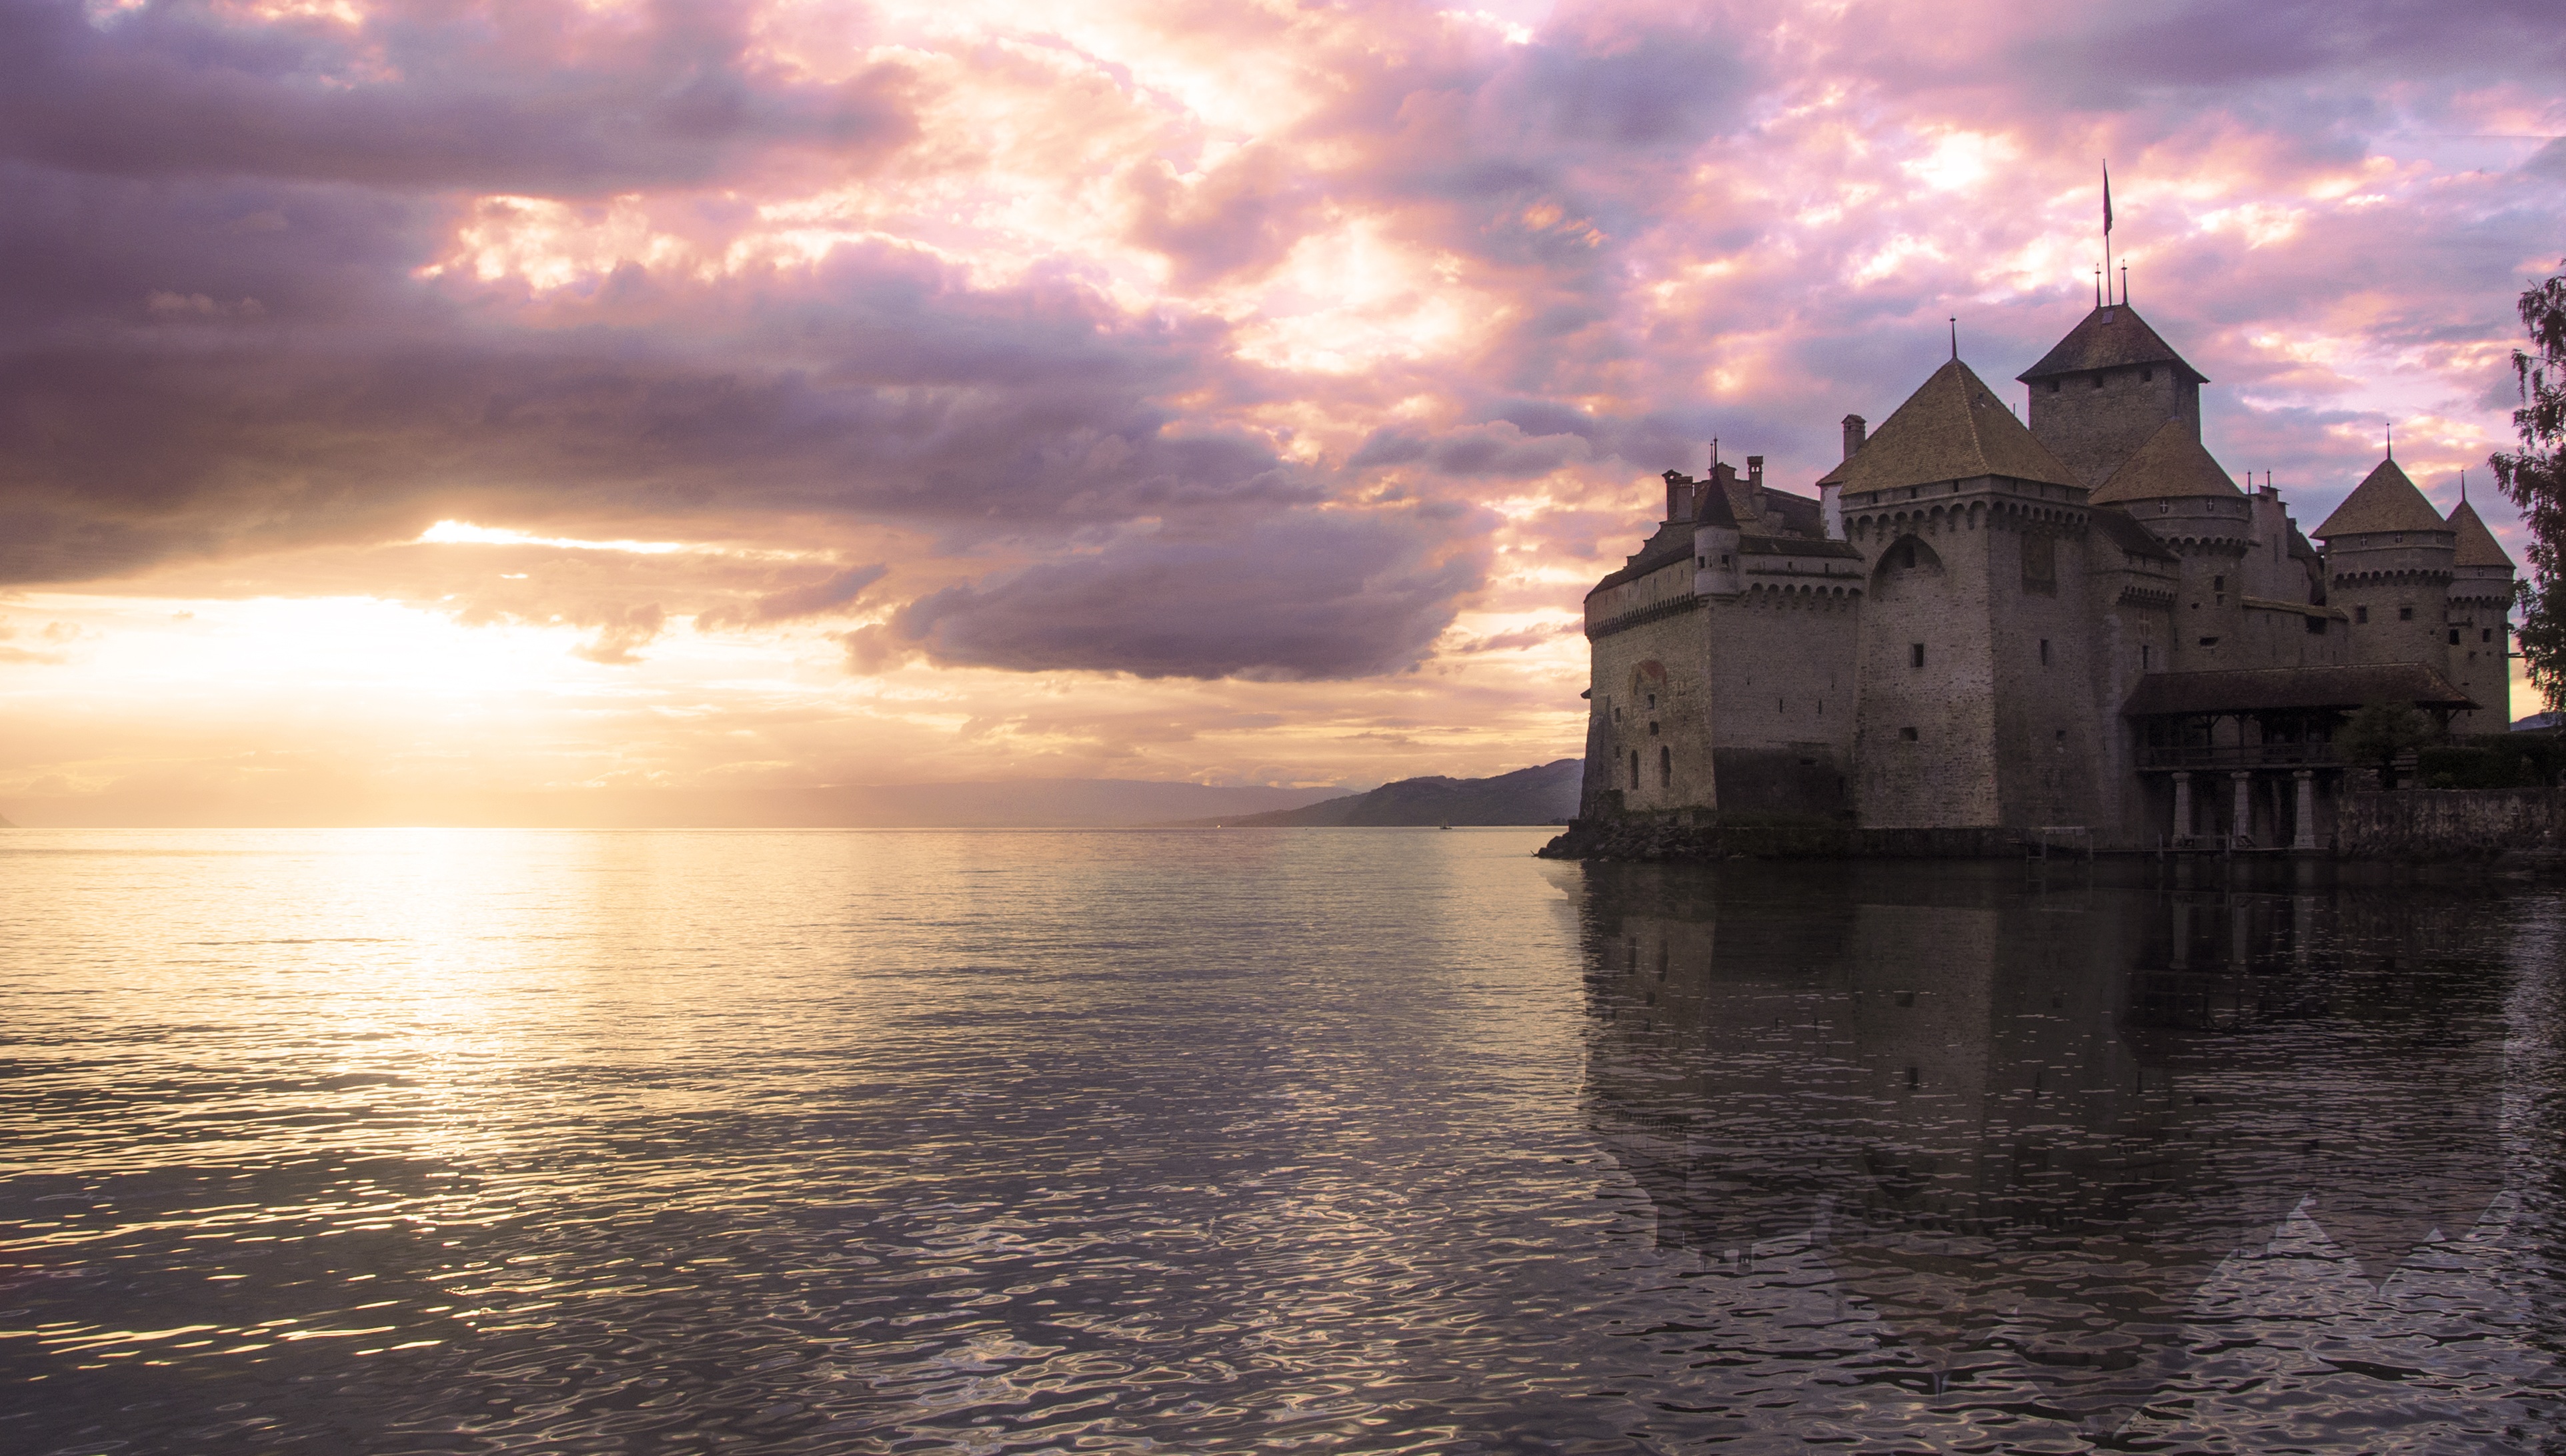 Switzerland Castle Sunset Water Lake Reflection Building Man Made Cloud Chillon Castle Lake Geneva 3848x2184